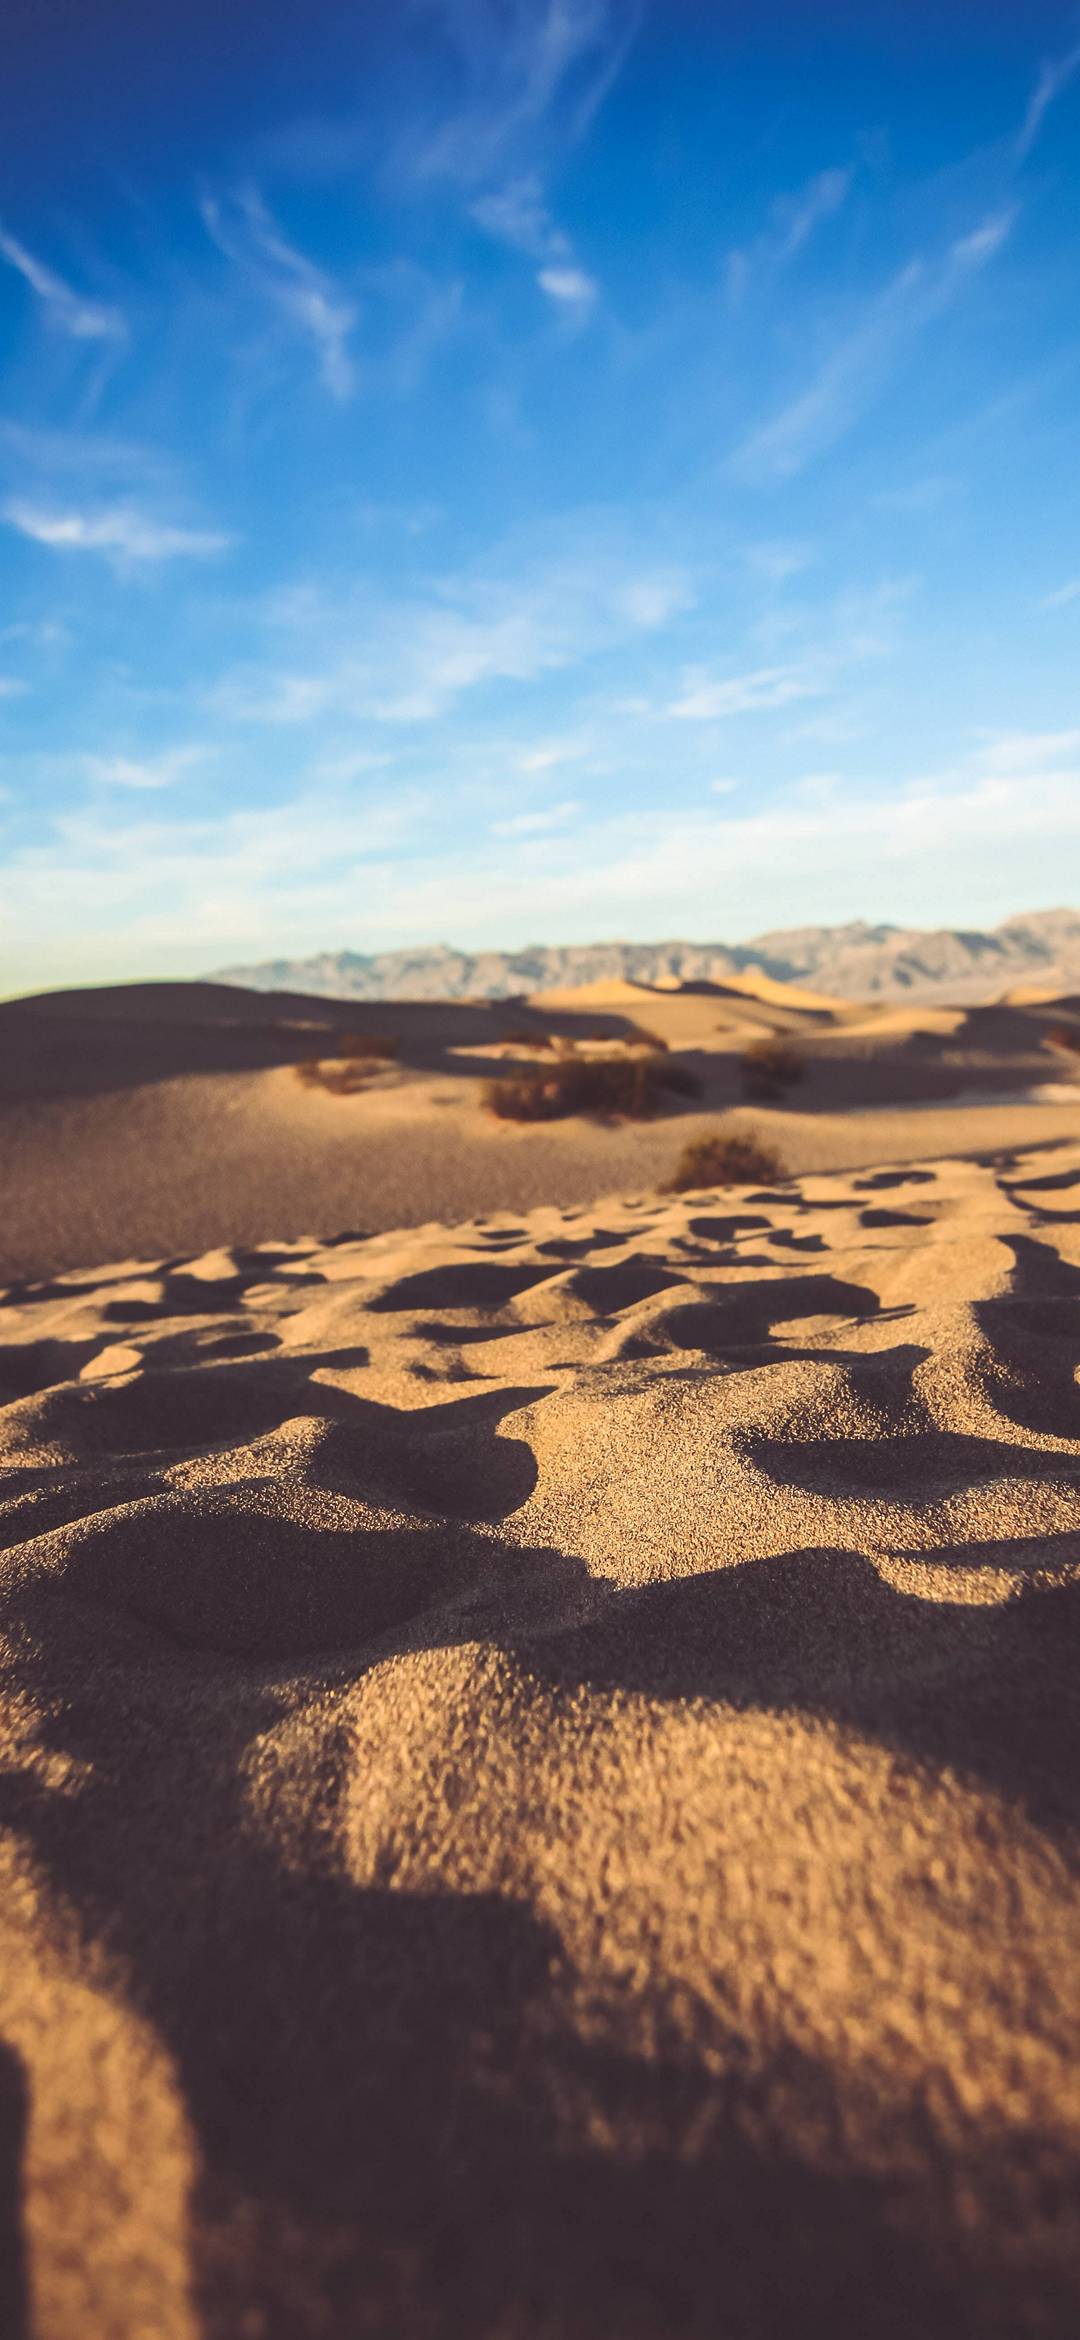 Download wallpaper 1125x2436 desert sunset clean skyline sand dunes  iphone x 1125x2436 hd background 528